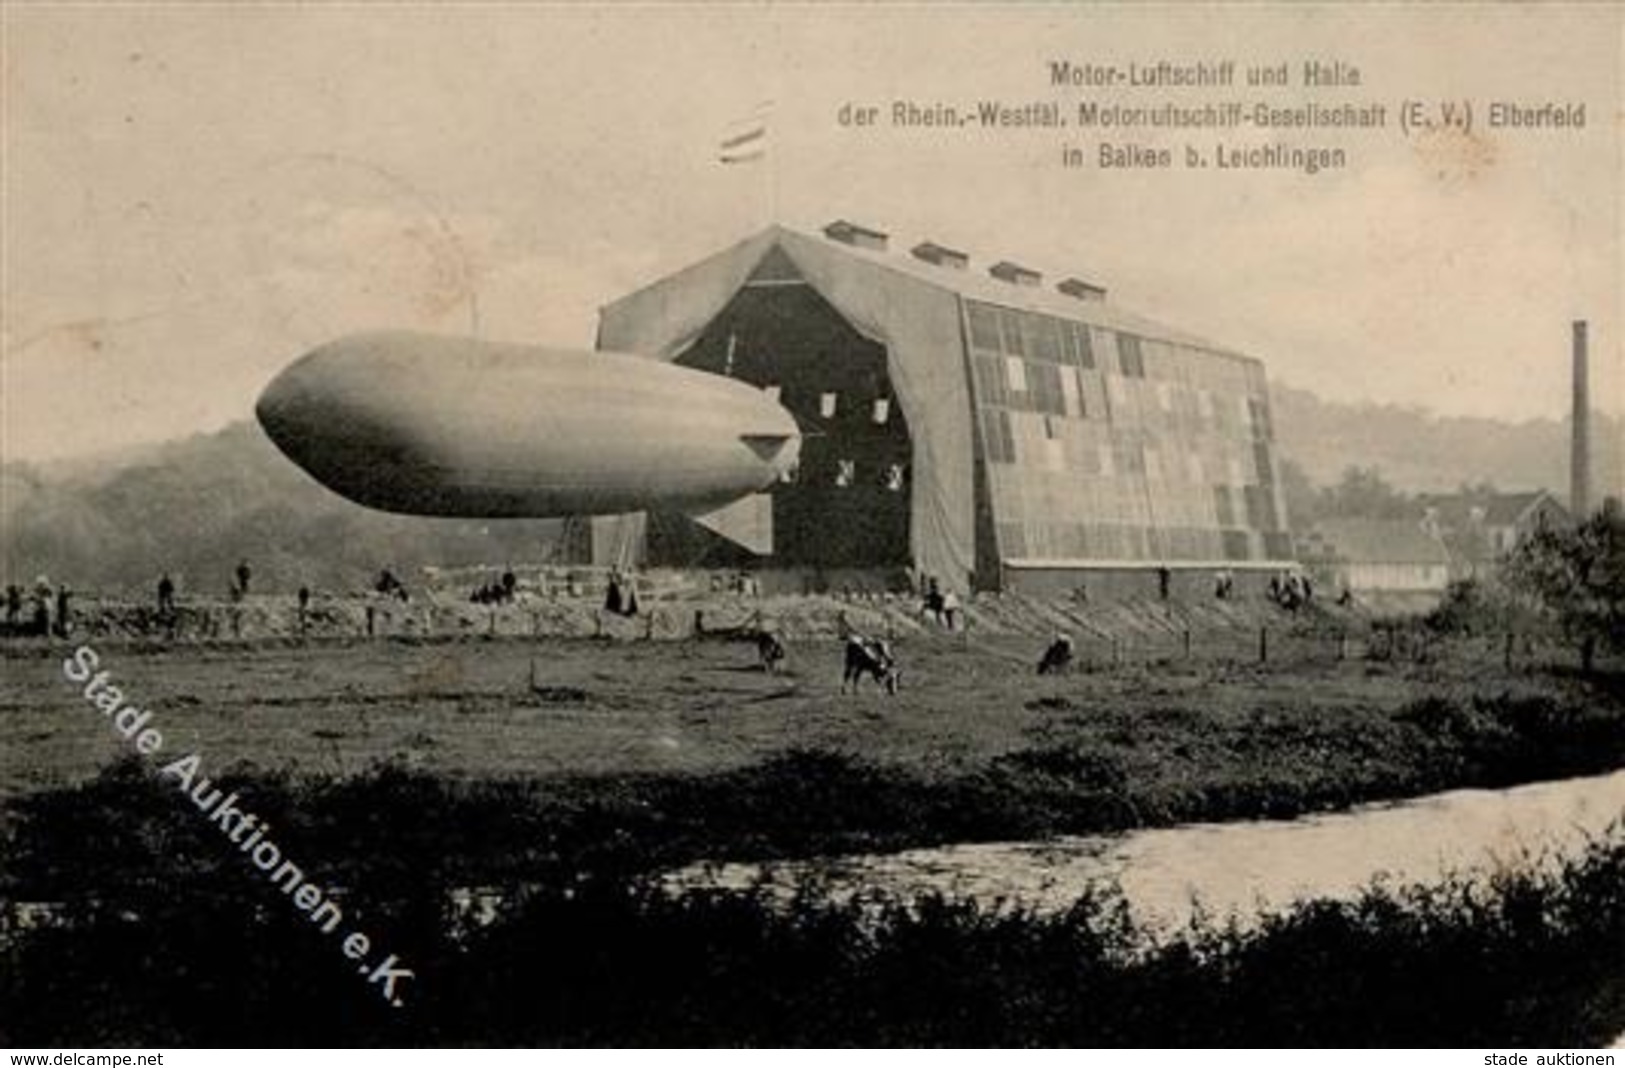 Zeppelin Leichlingen (5653) Motor Luftschiff Und Halle Elberfeld In Balken 1912 I-II Dirigeable - Airships